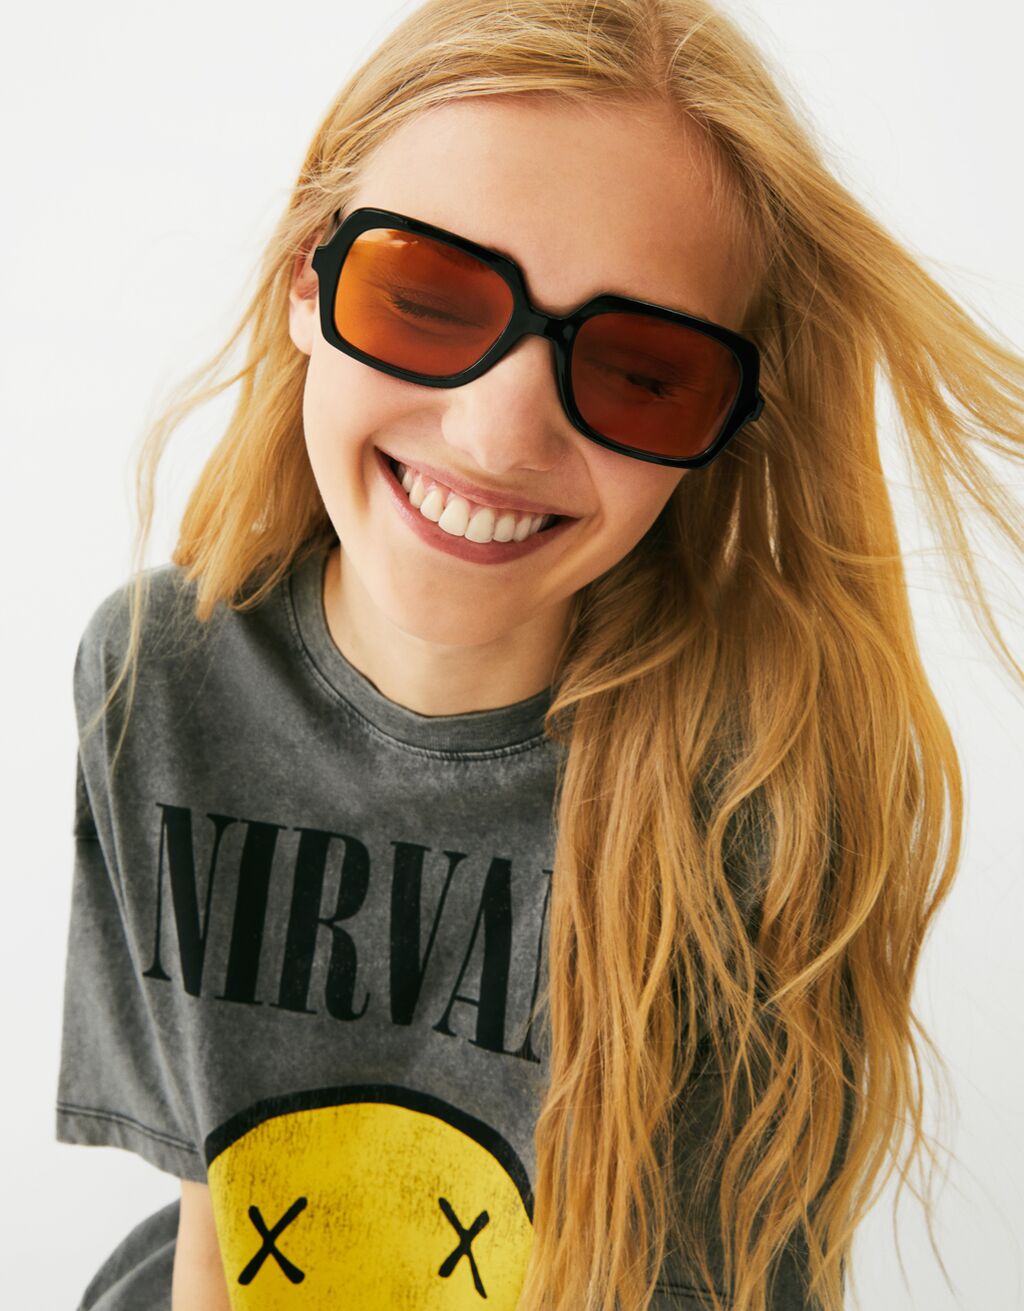 Camiseta manga curta Nirvana estampado happy face